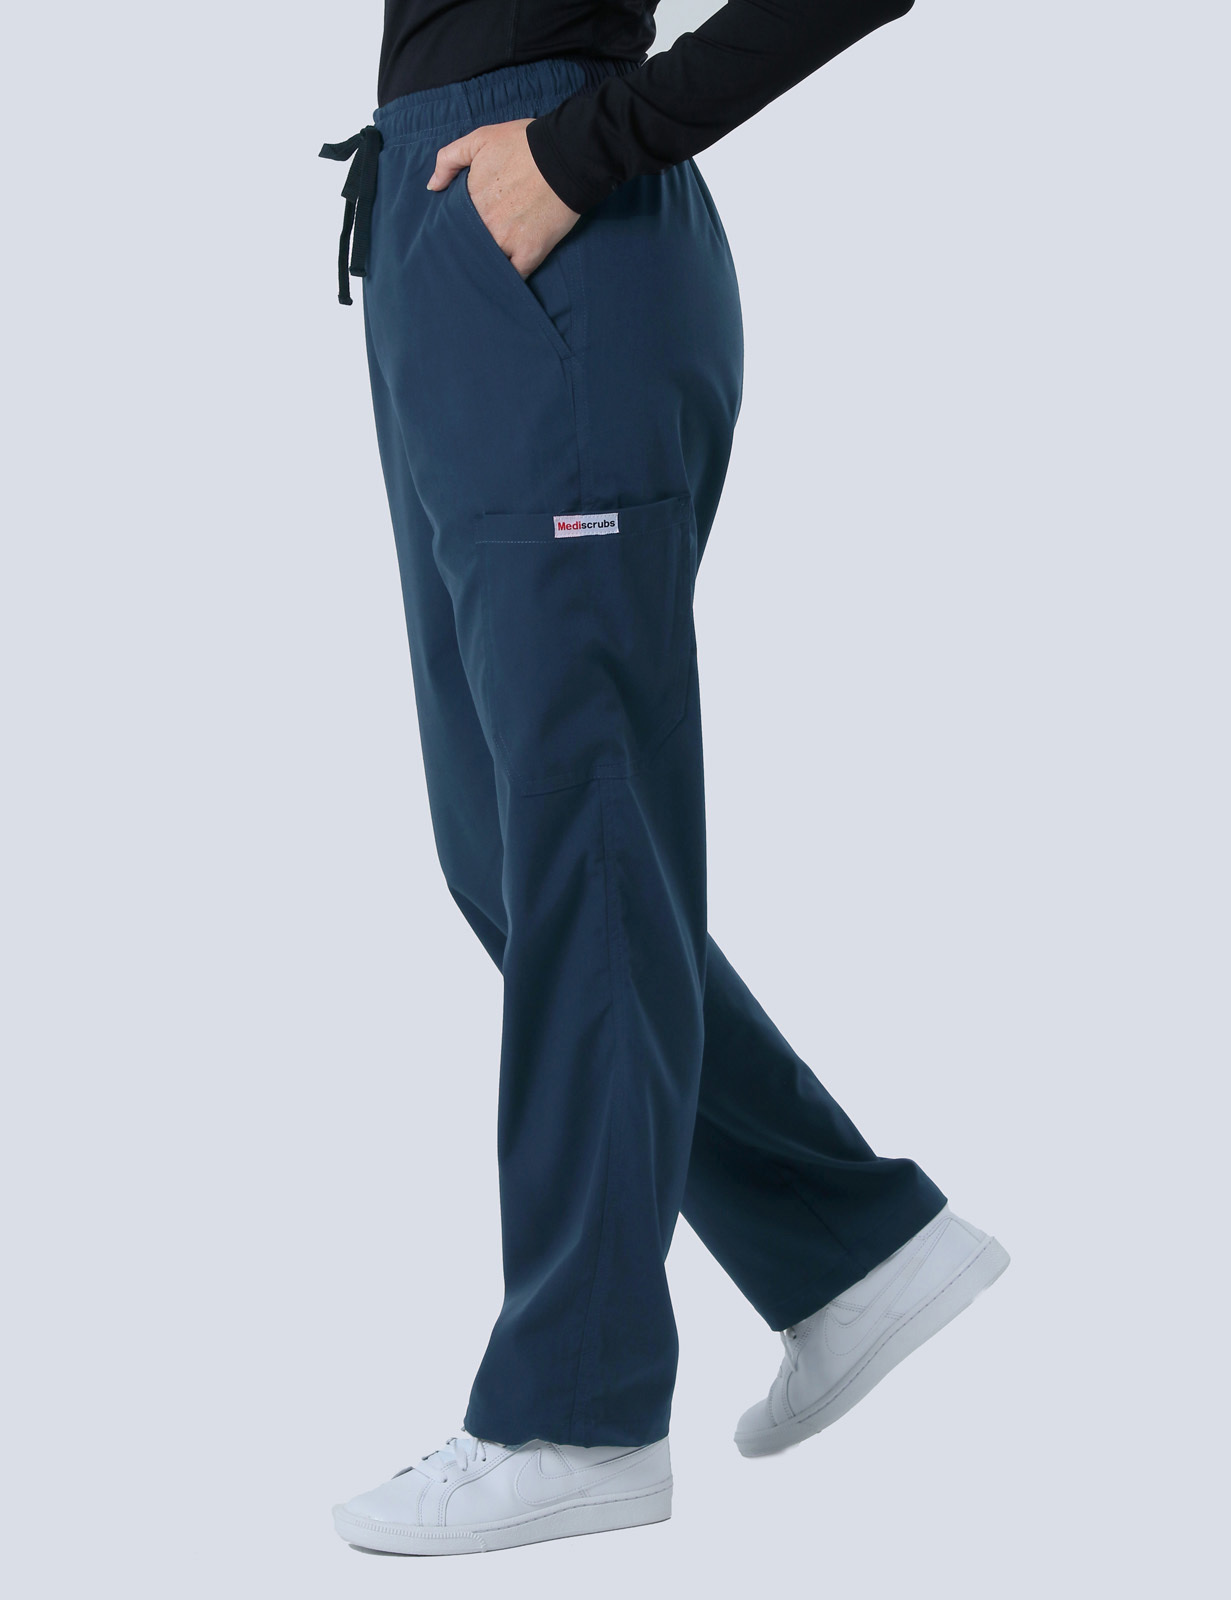 James Cook University Vet - Veterinarian (Women's Fit Spandex Scrub Top and Cargo Pants in Navy incl Logos)